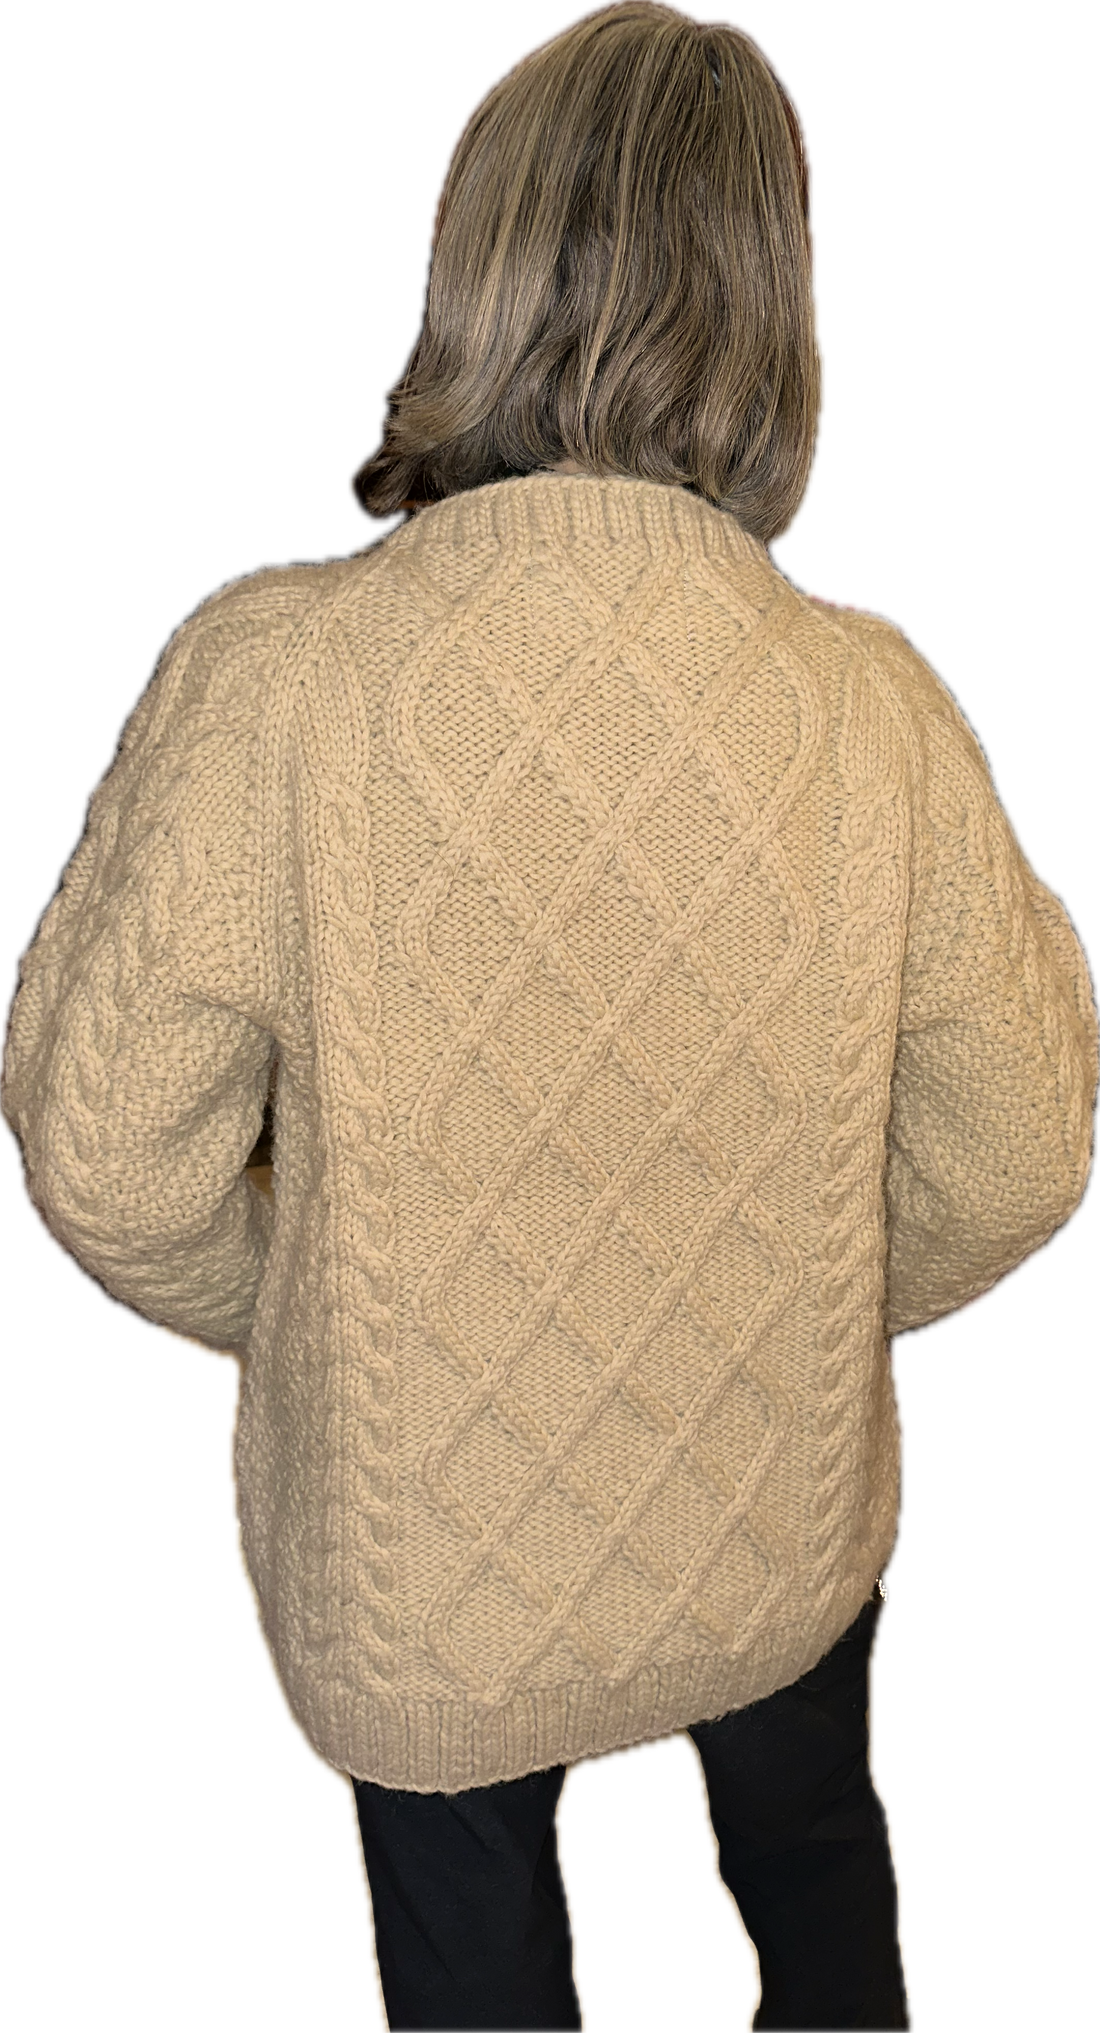 Canadian Knit Sweater - L